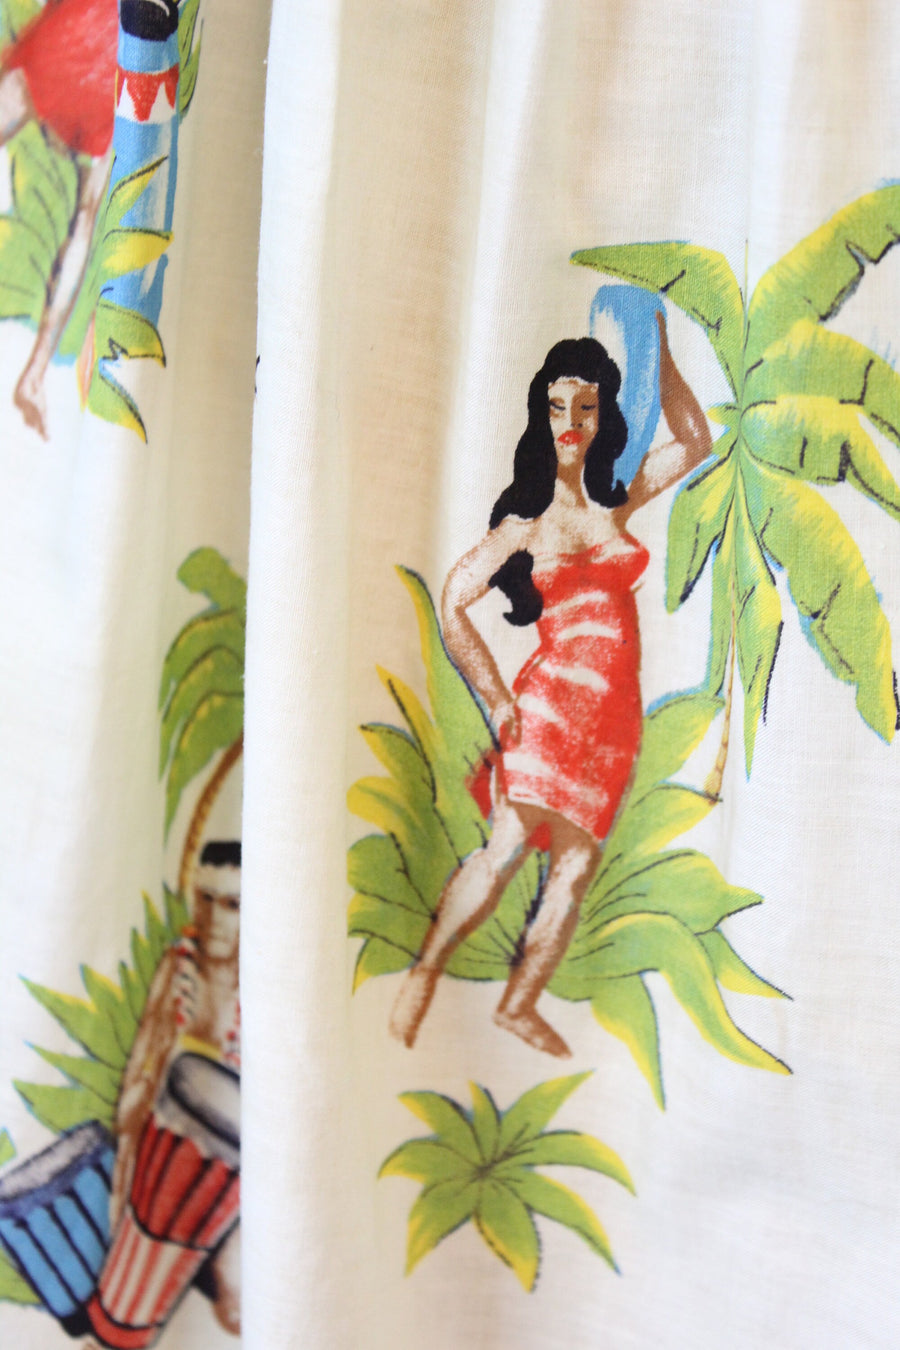 1950s NATIVE HAWAIIAN novelty print skirt medium | new spring summer